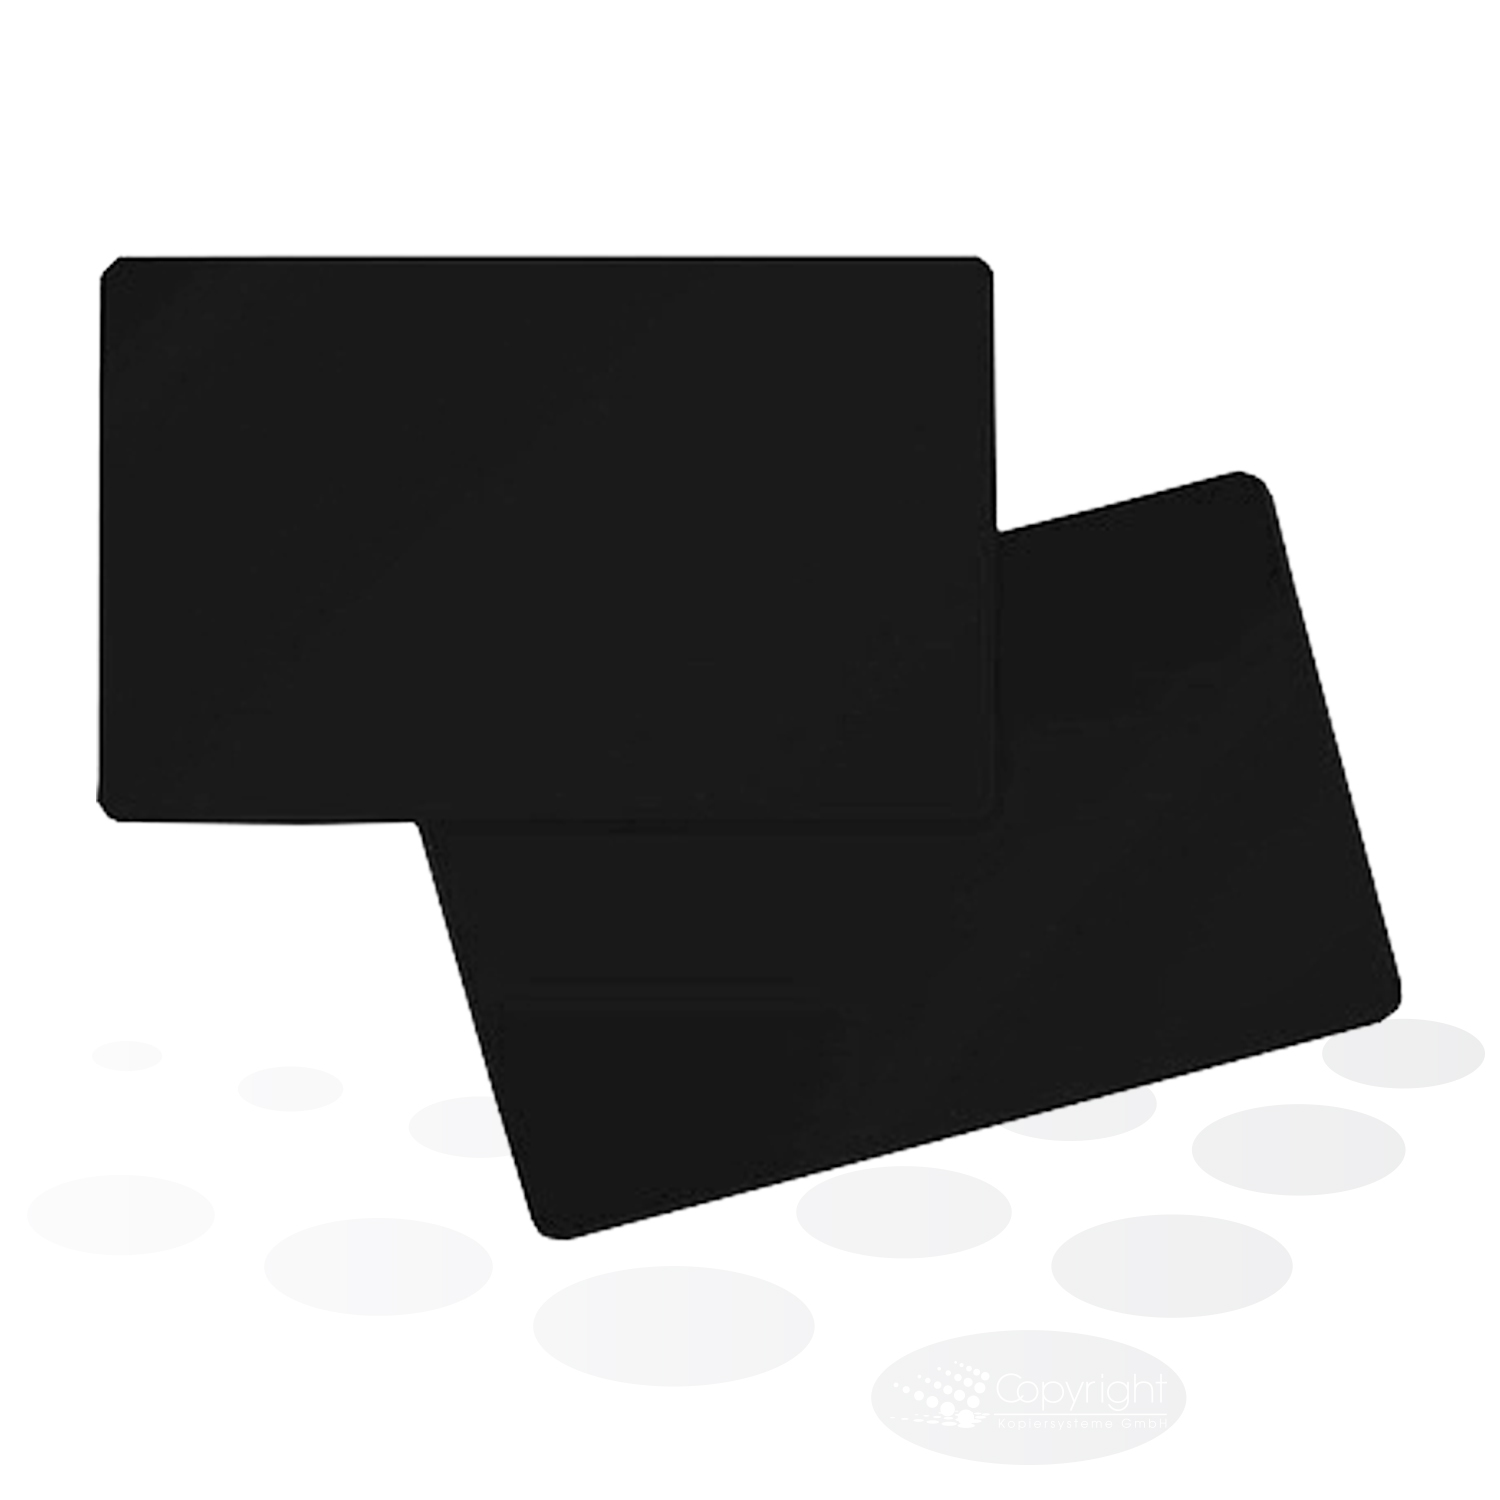 Plastikkarten – schwarz, matt